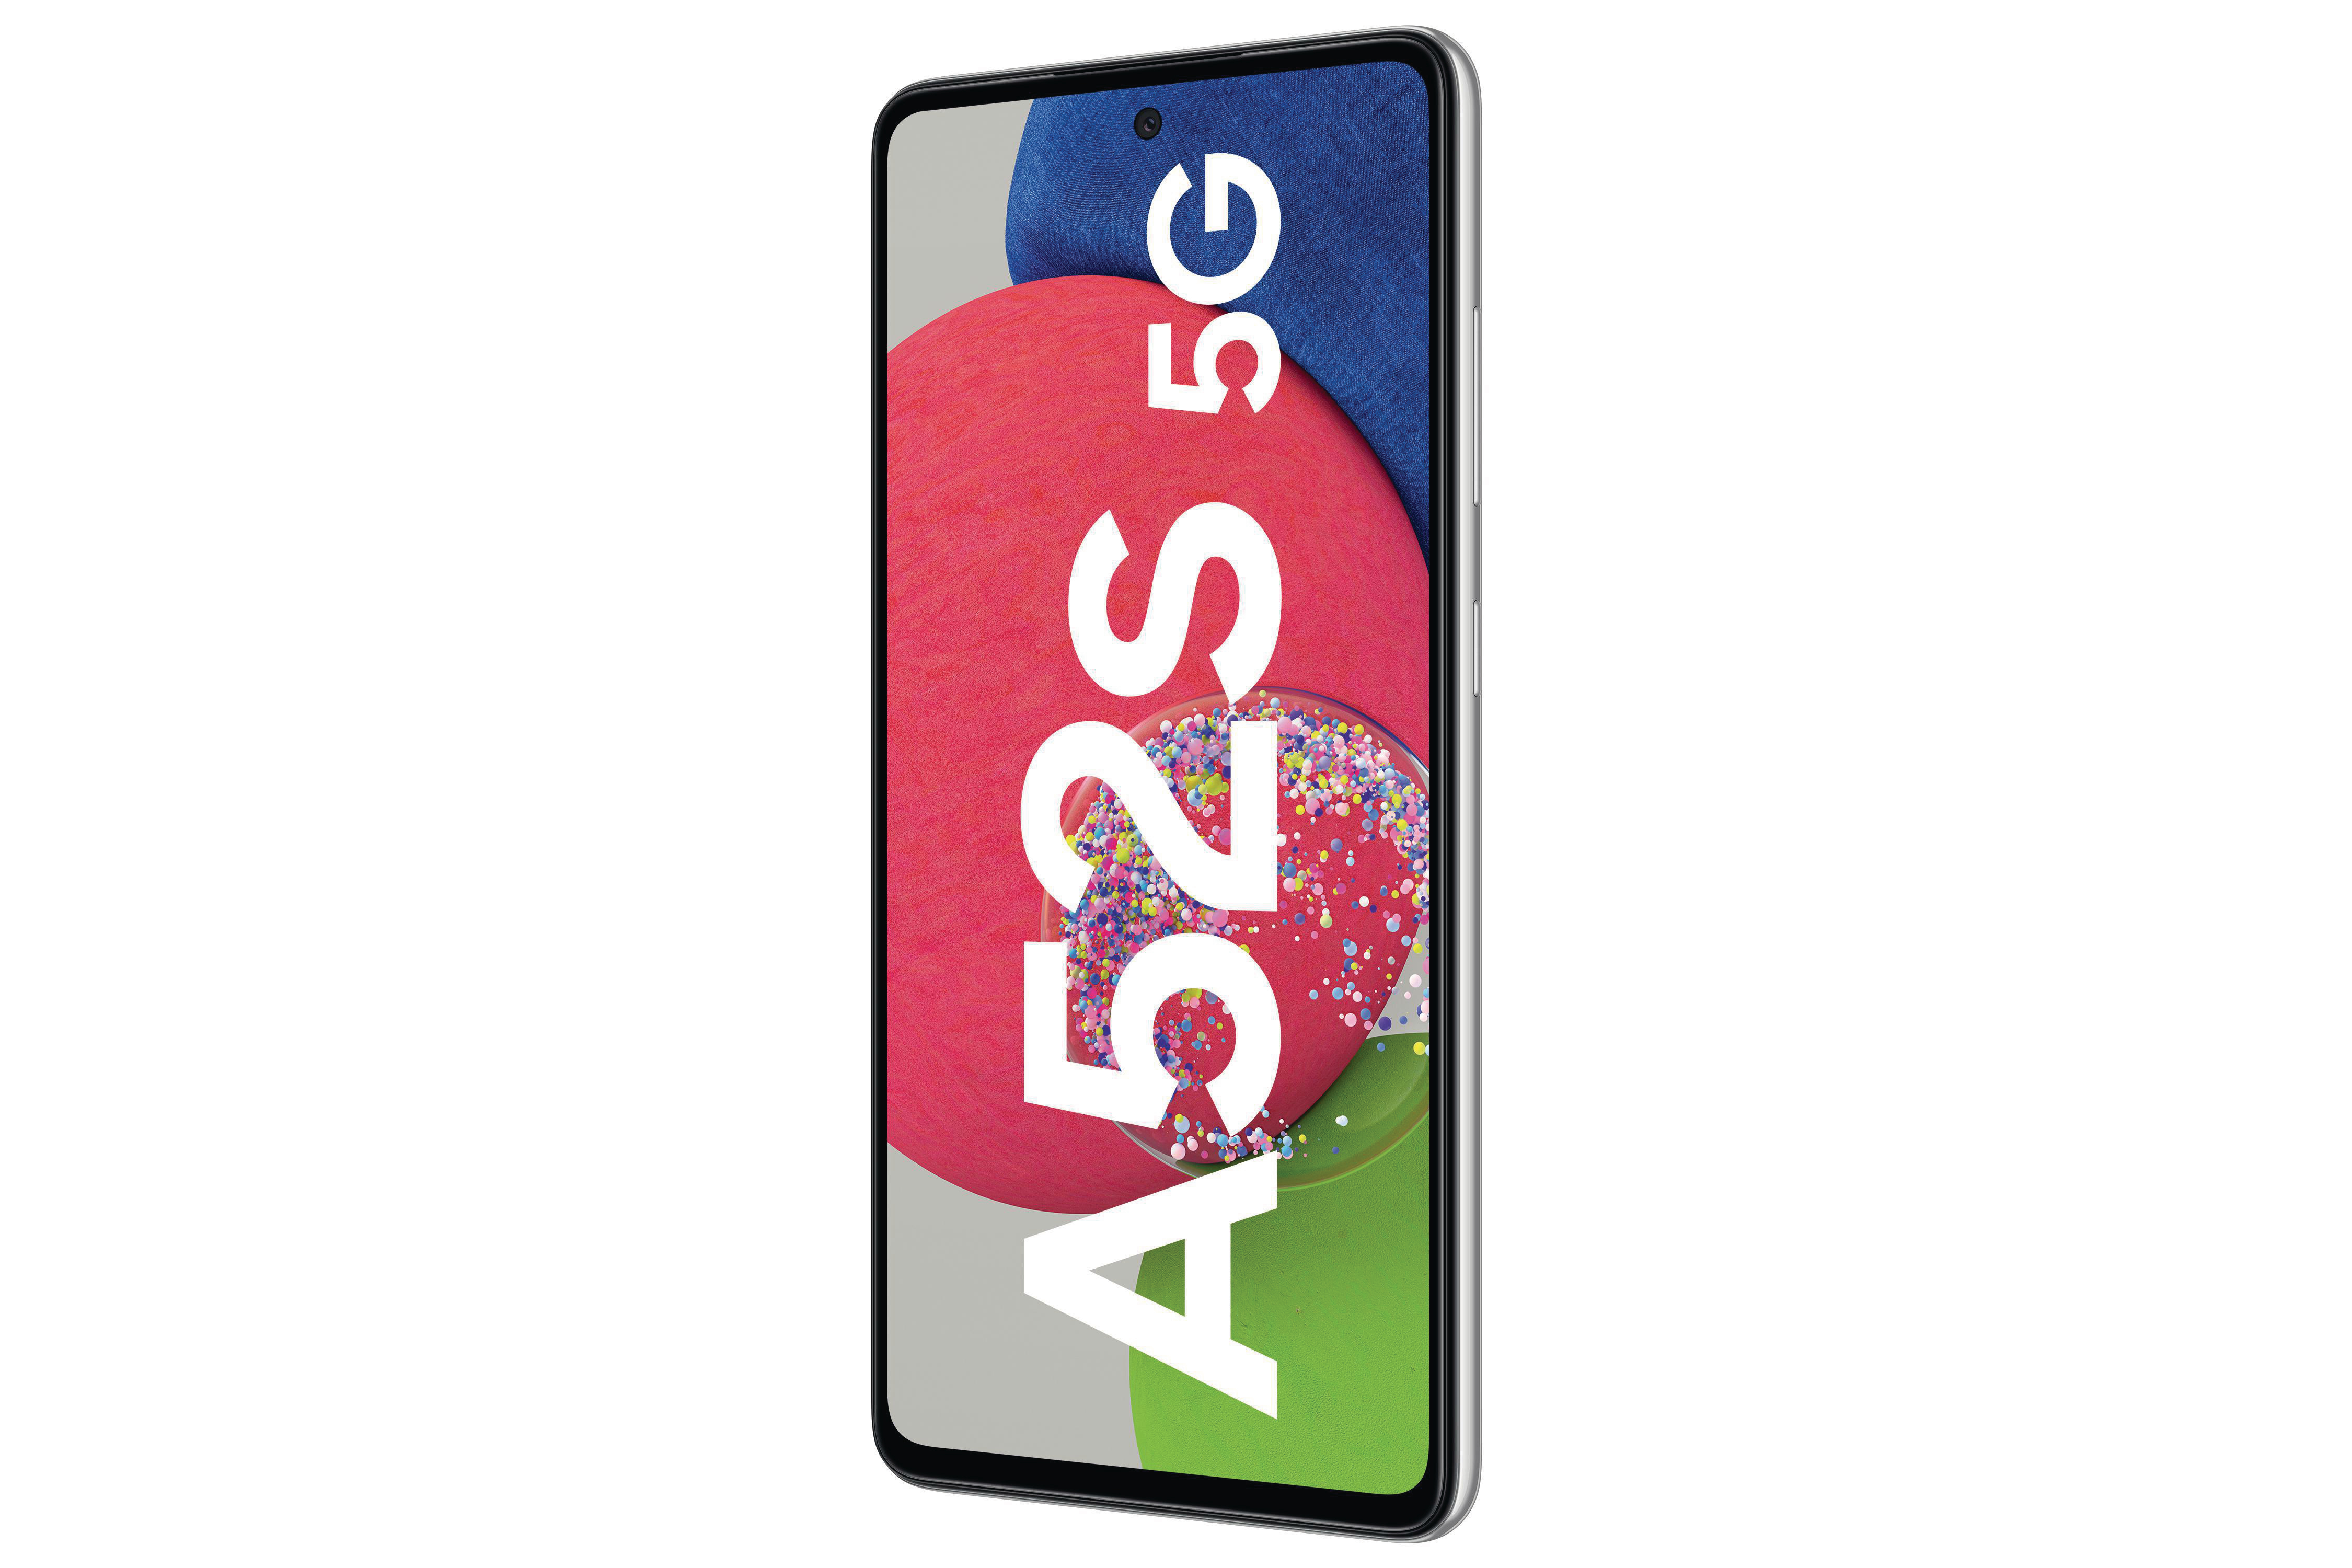 SAMSUNG Galaxy 5G White Dual A52s 256 SIM Awesome GB